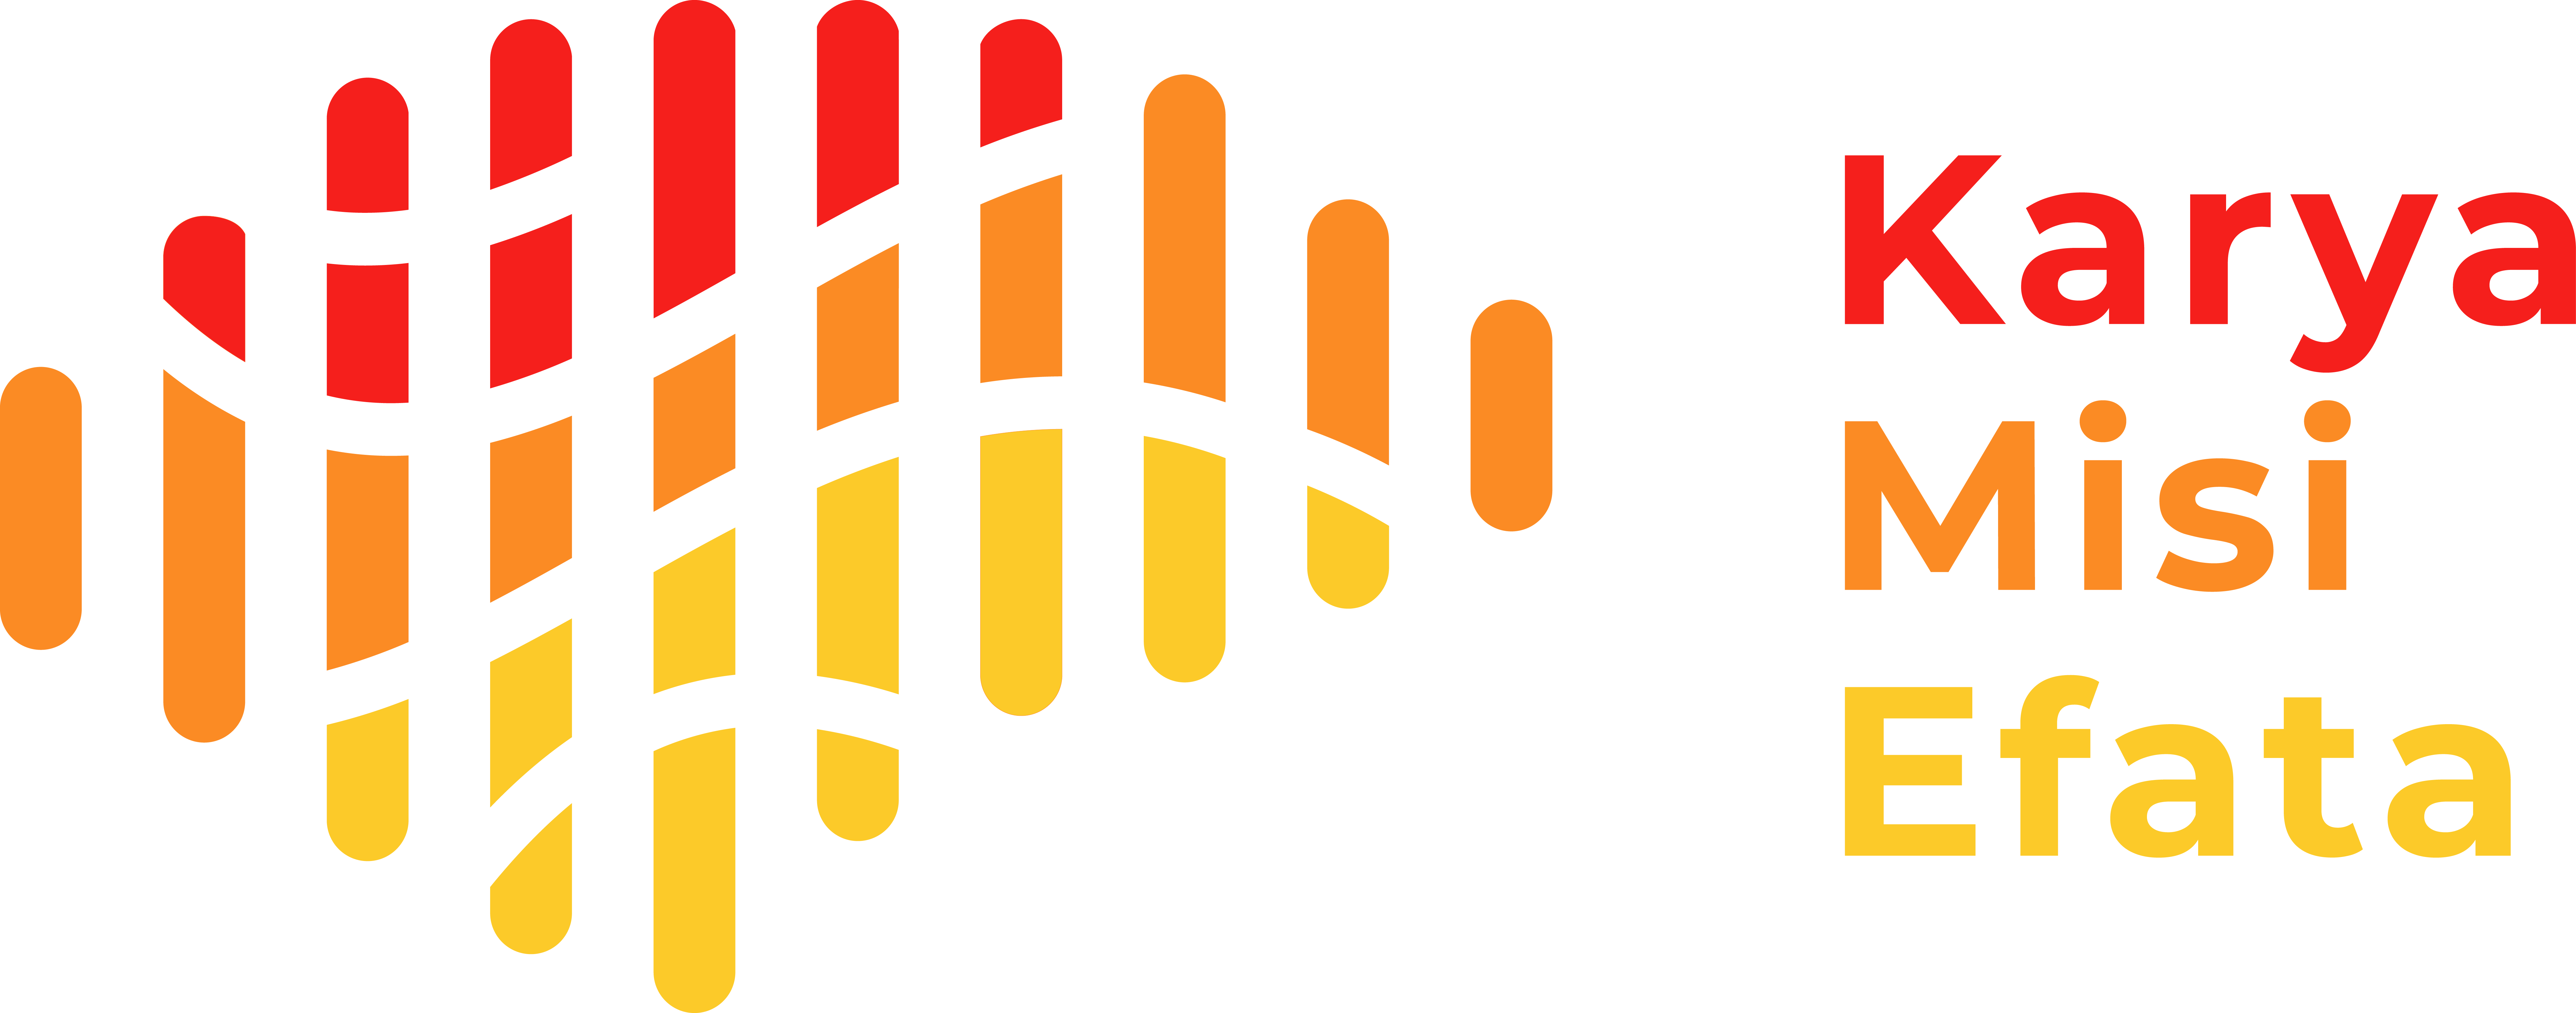 Karya Misi Efata Logo